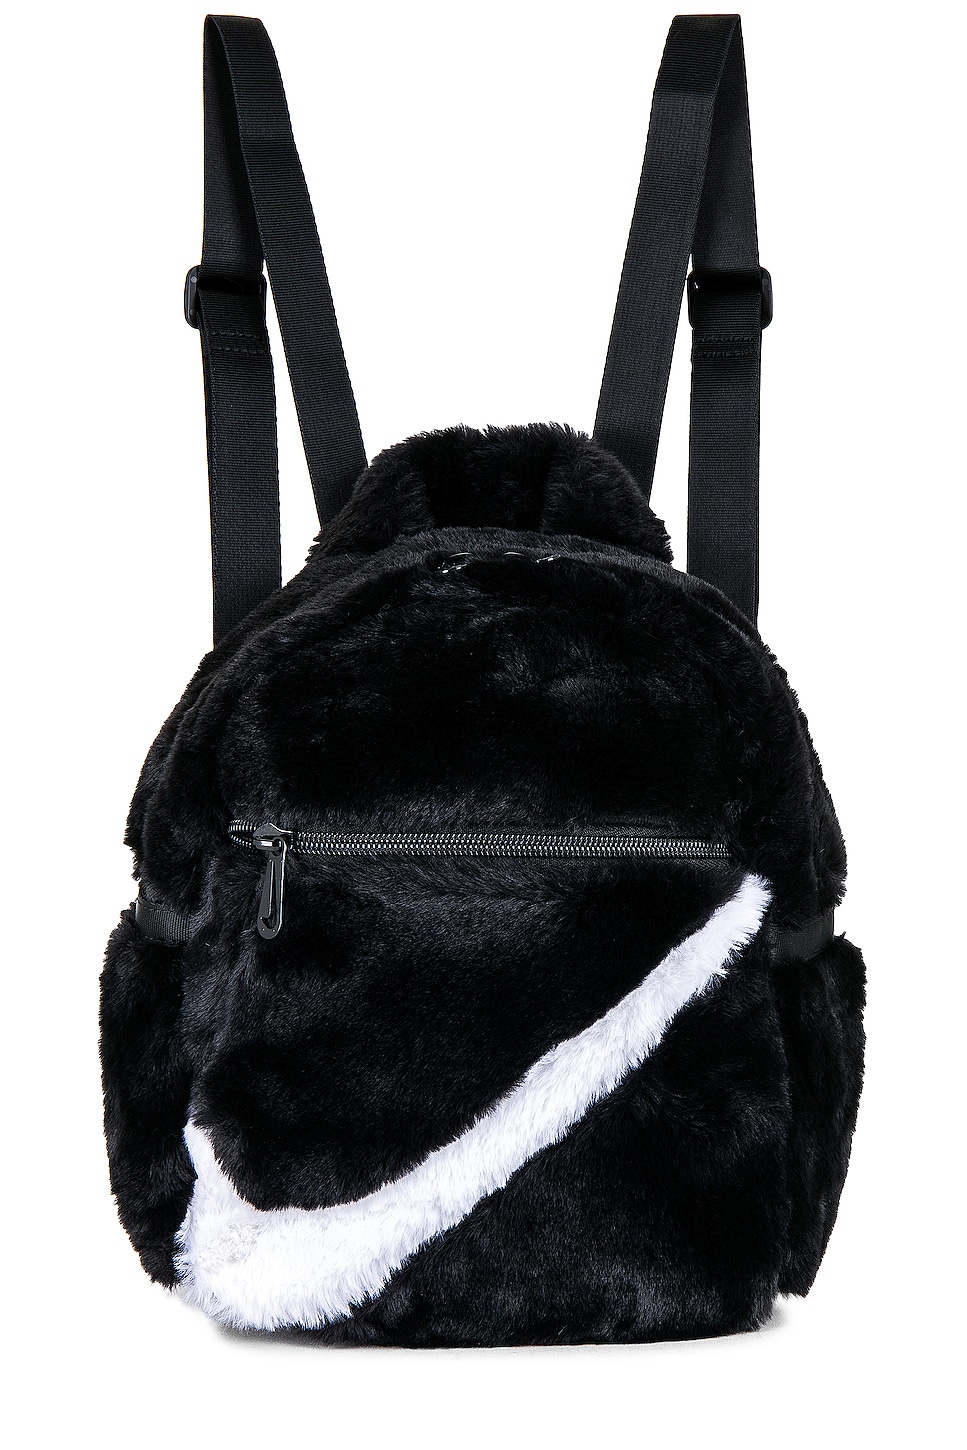 Nike Sportswear Futura 365 Faux Fur Mini Backpack in Black/Black/White